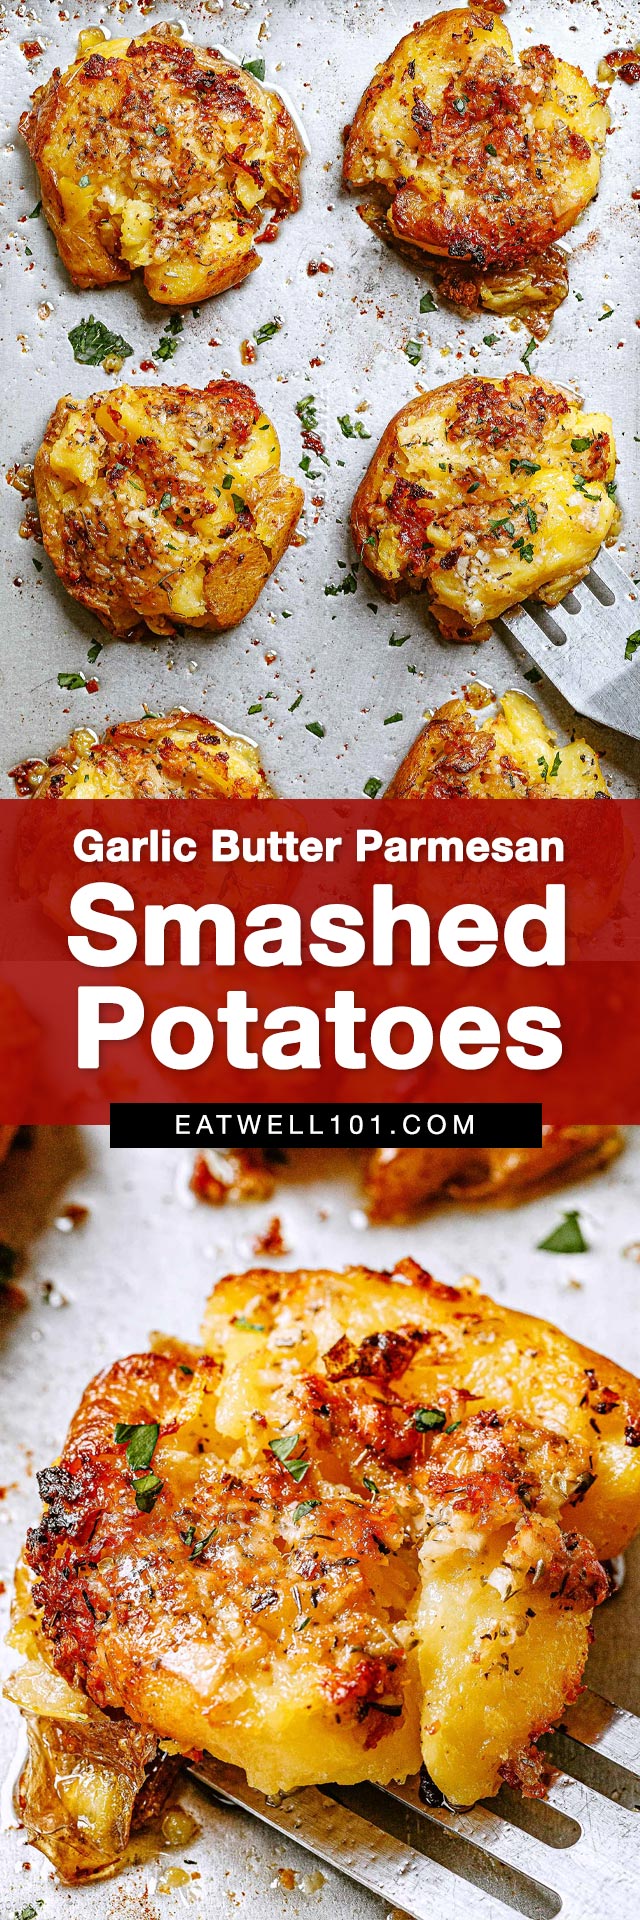 Garlic Butter Parmesan Smashed Potatoes Recipe - #potatoes #baked #recipe #eatwell101 - These garlic butter parmesan smashed potatoes make the ultimate side dish for virtually anything!